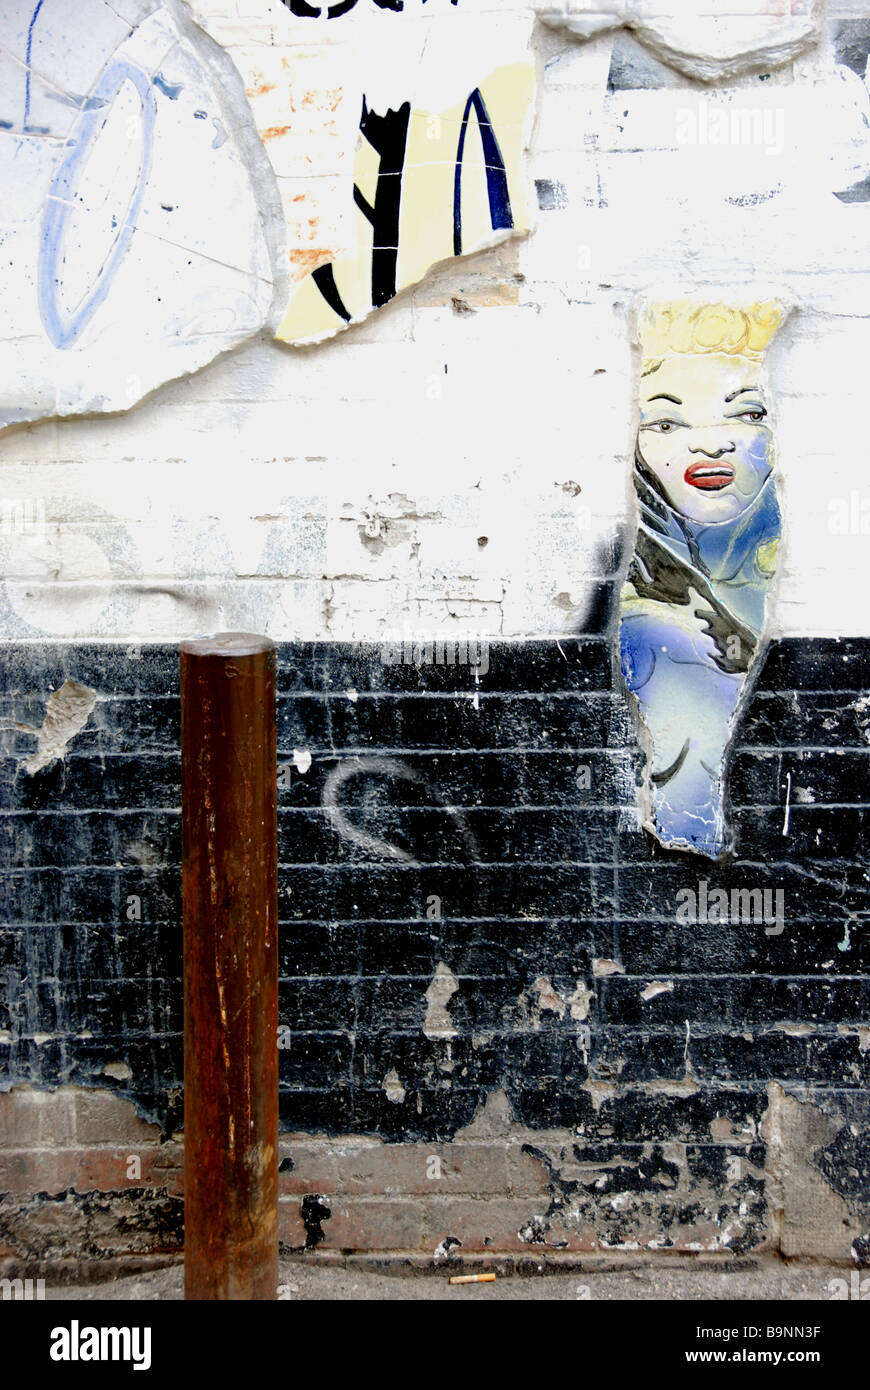 USA, Idaho, Boise, Art found in Boise's Freak Alley Stock Photo